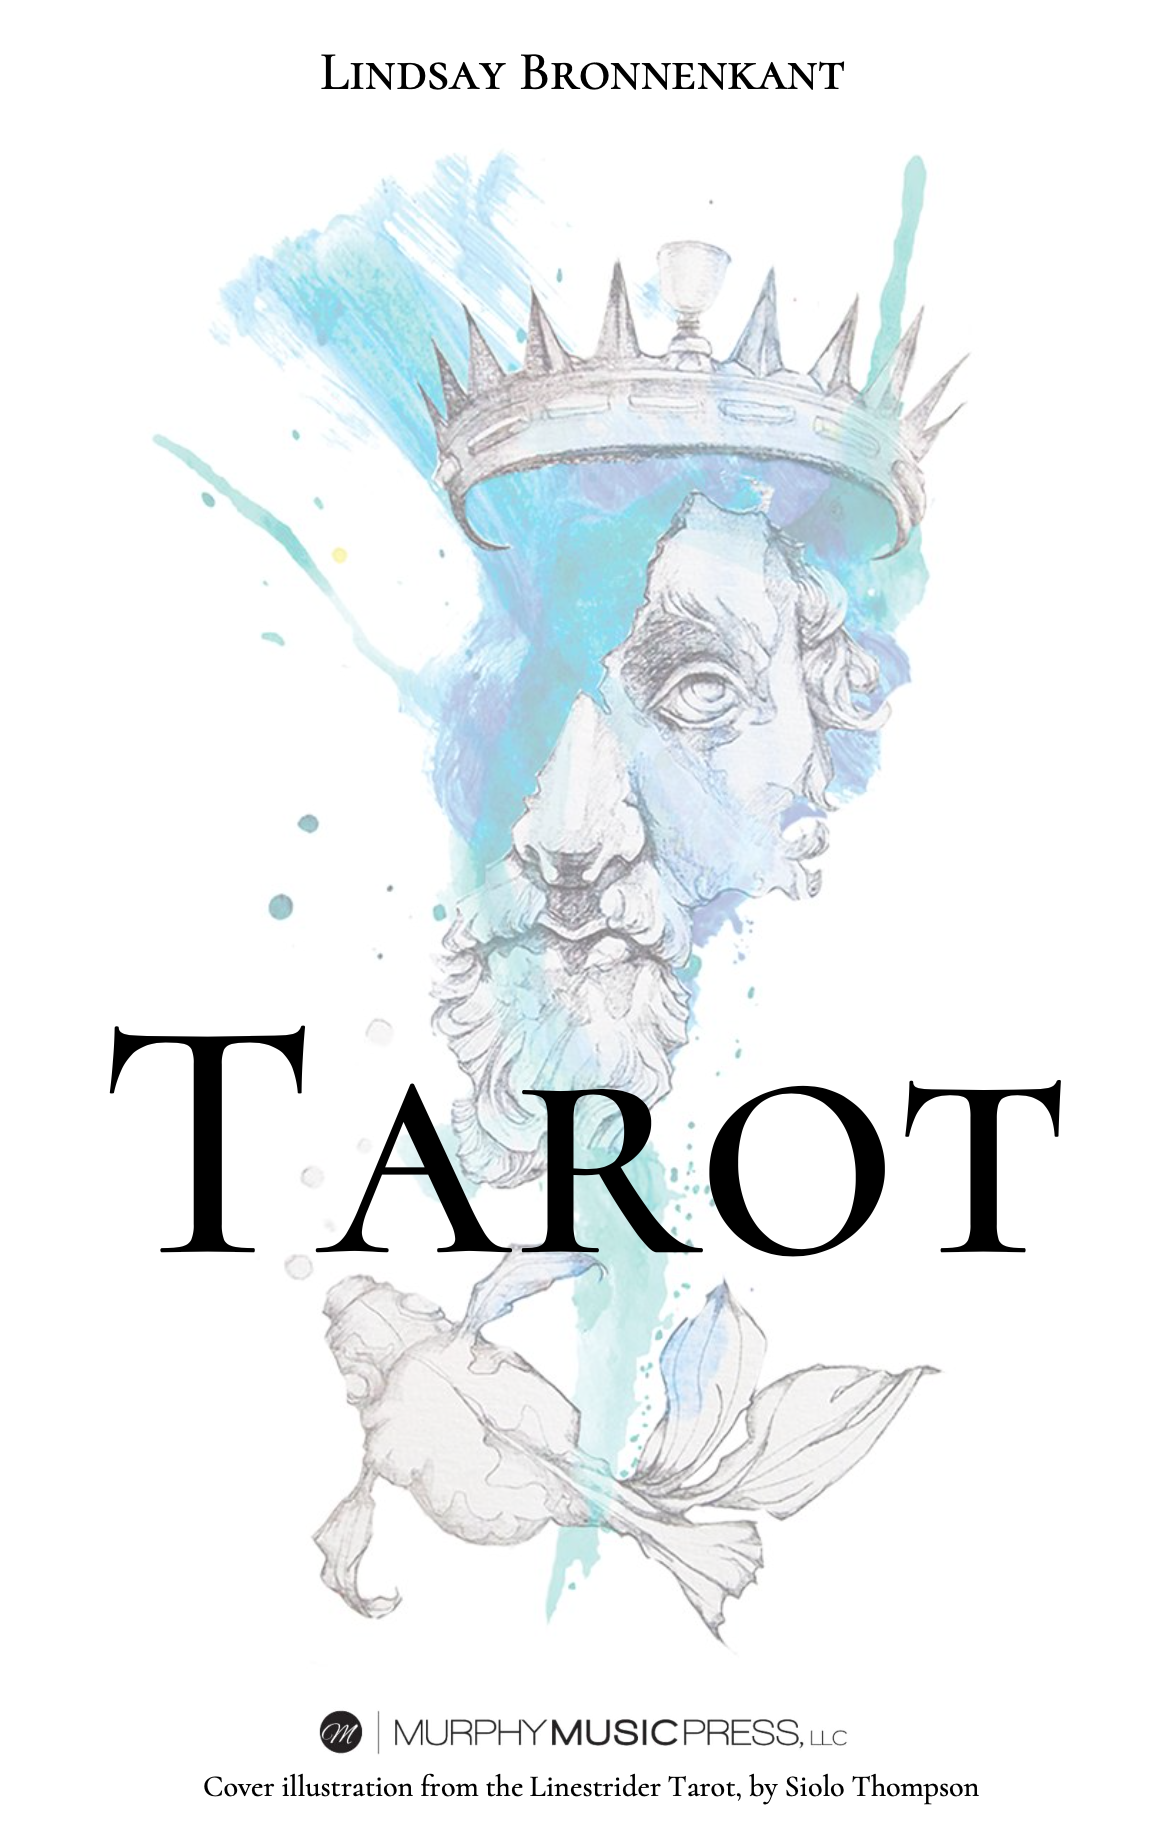 Tarot by Lindsay Bronnenkant